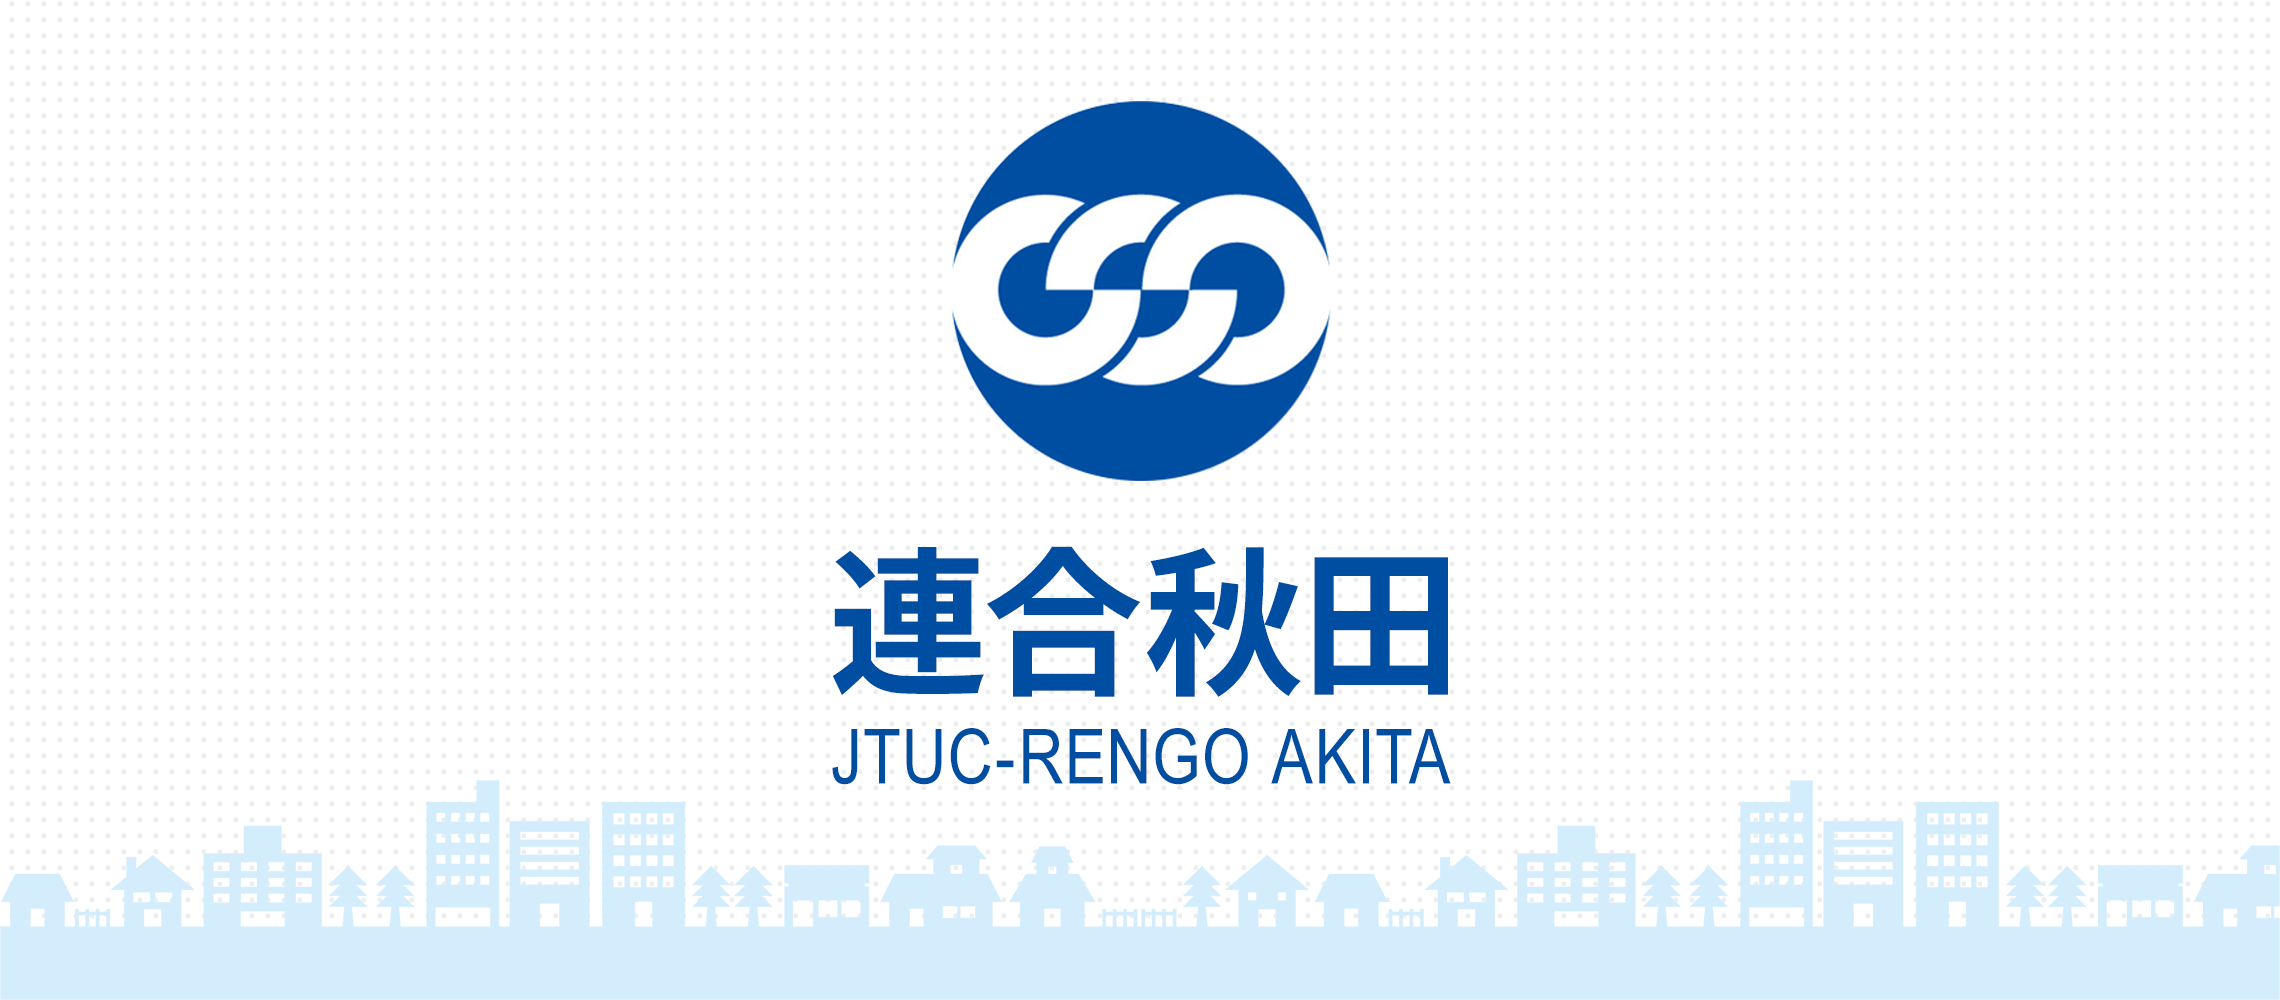 連合秋田 - JTUC-RENGO AKITA